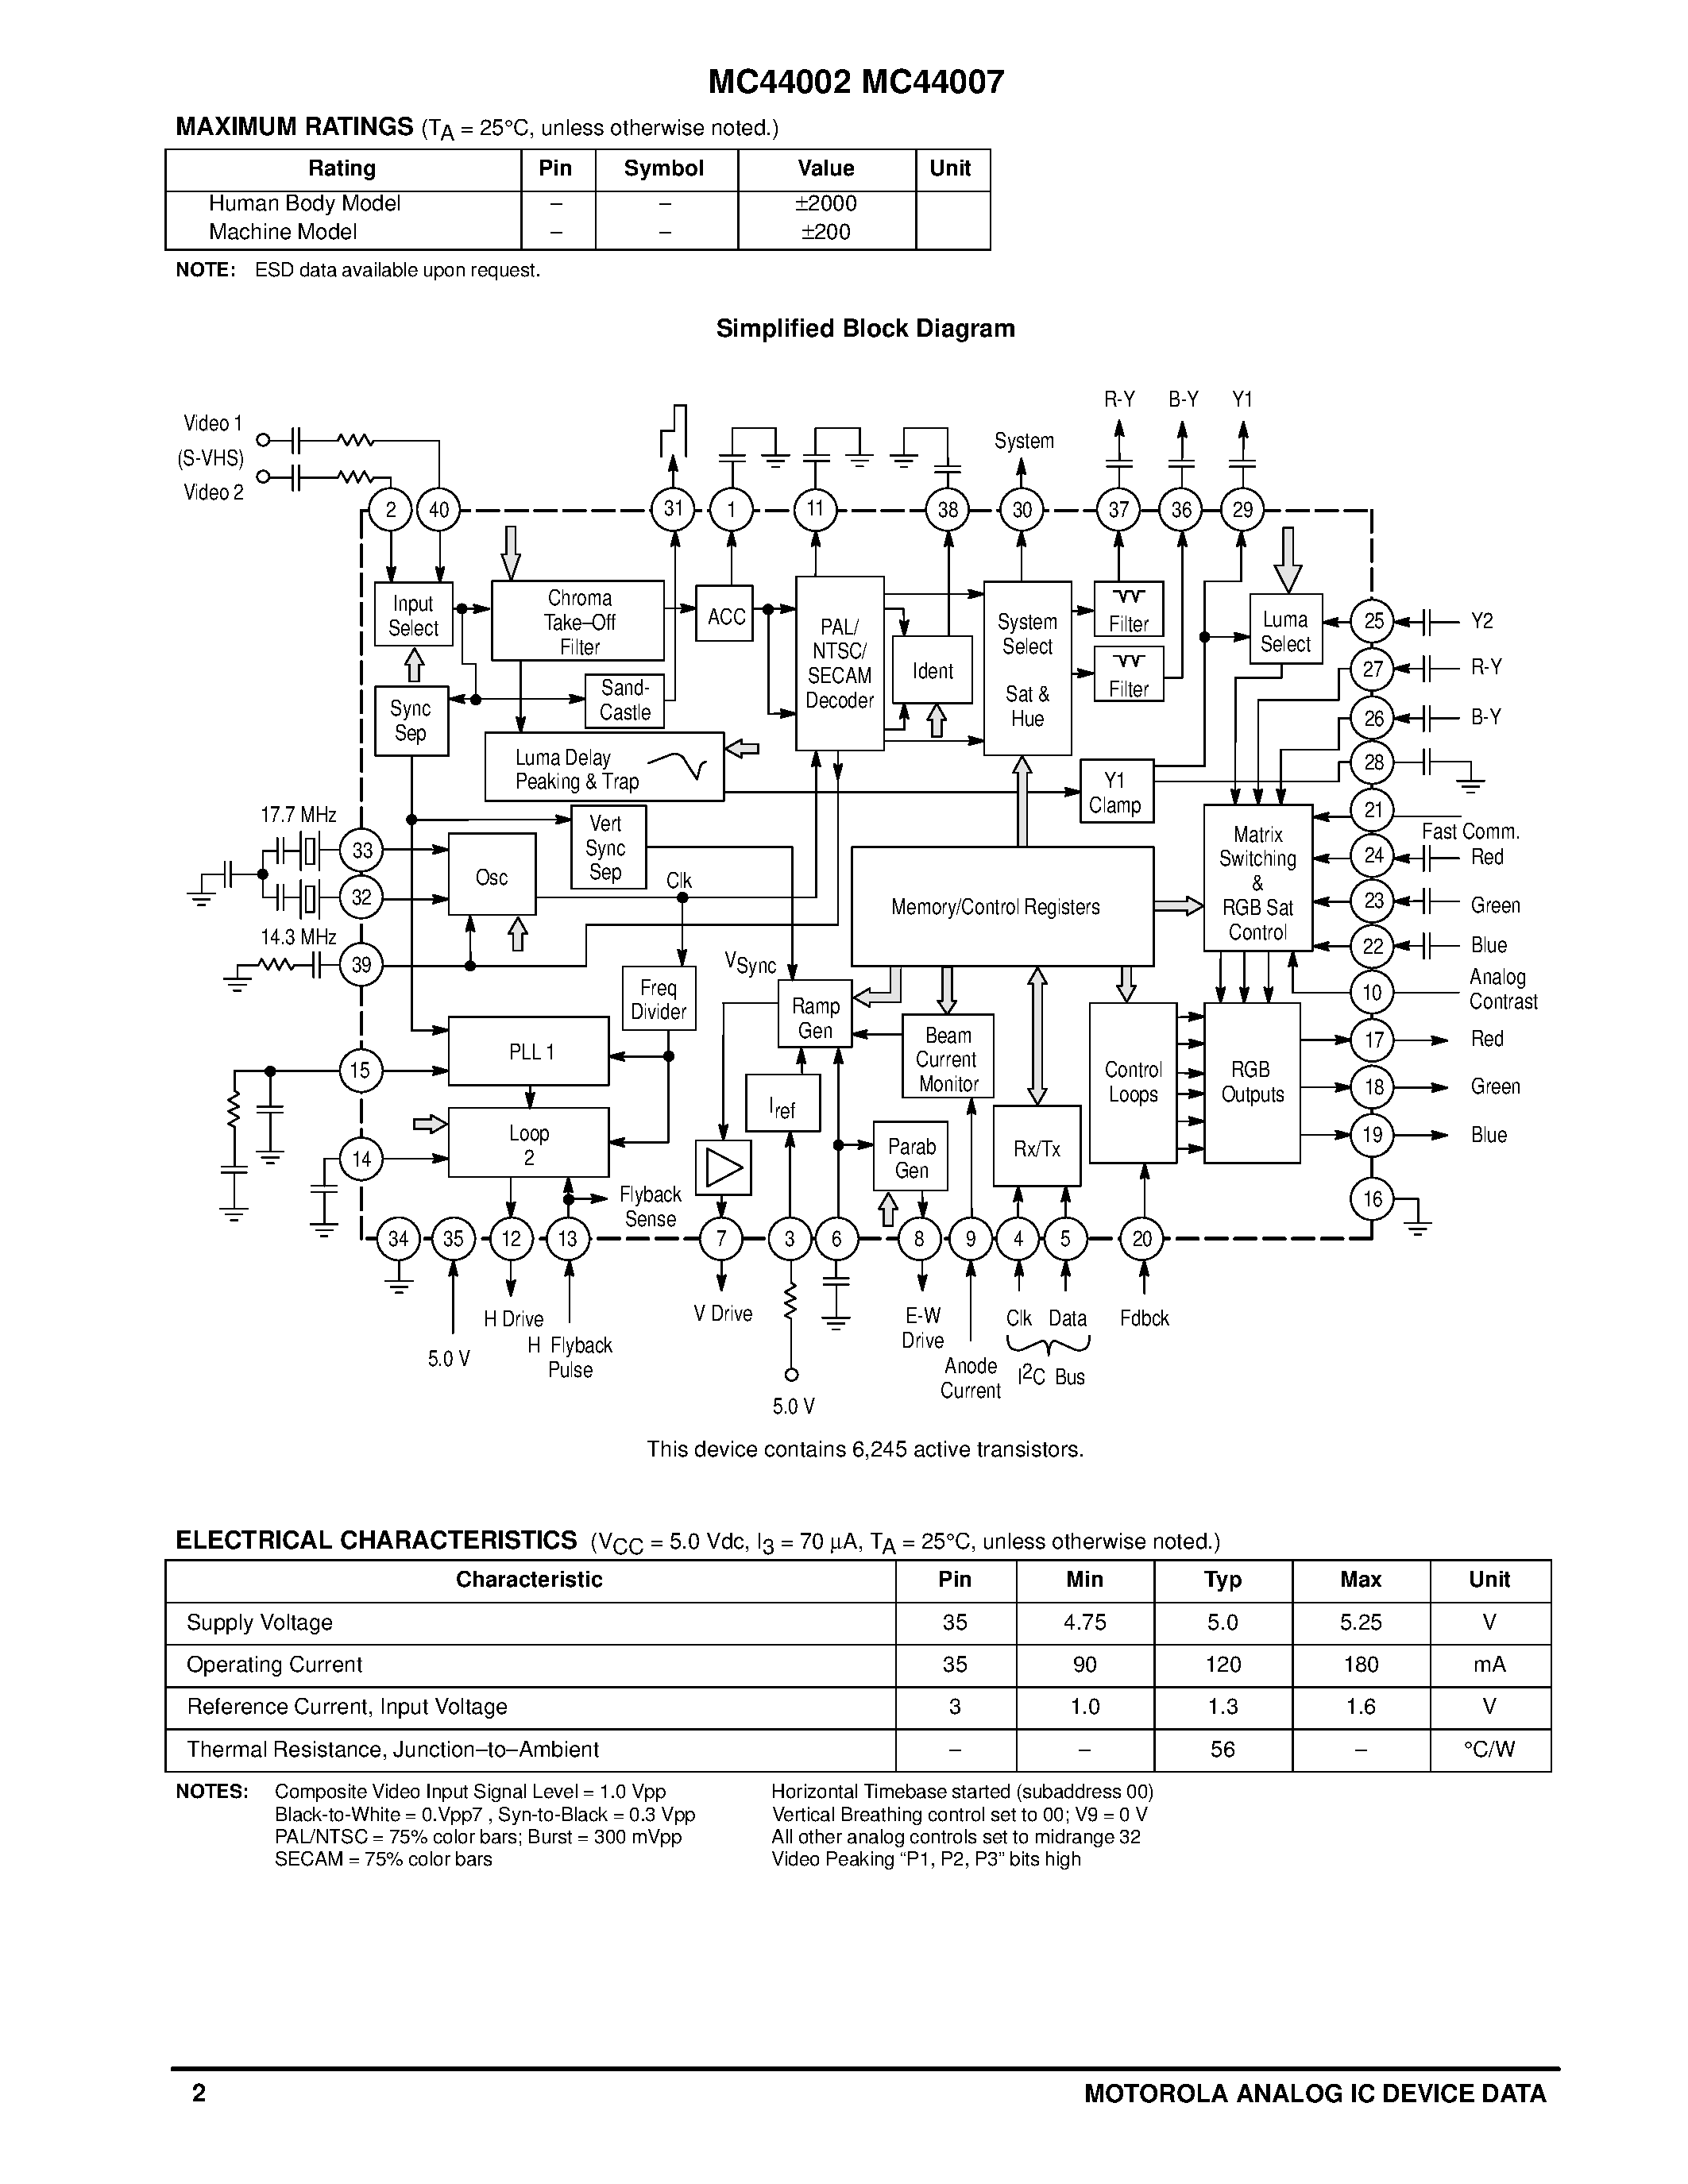 Datasheet MC44002 - (MC44007 / MC44002) CHROMA 4 VIDEO PROCESSOR page 2